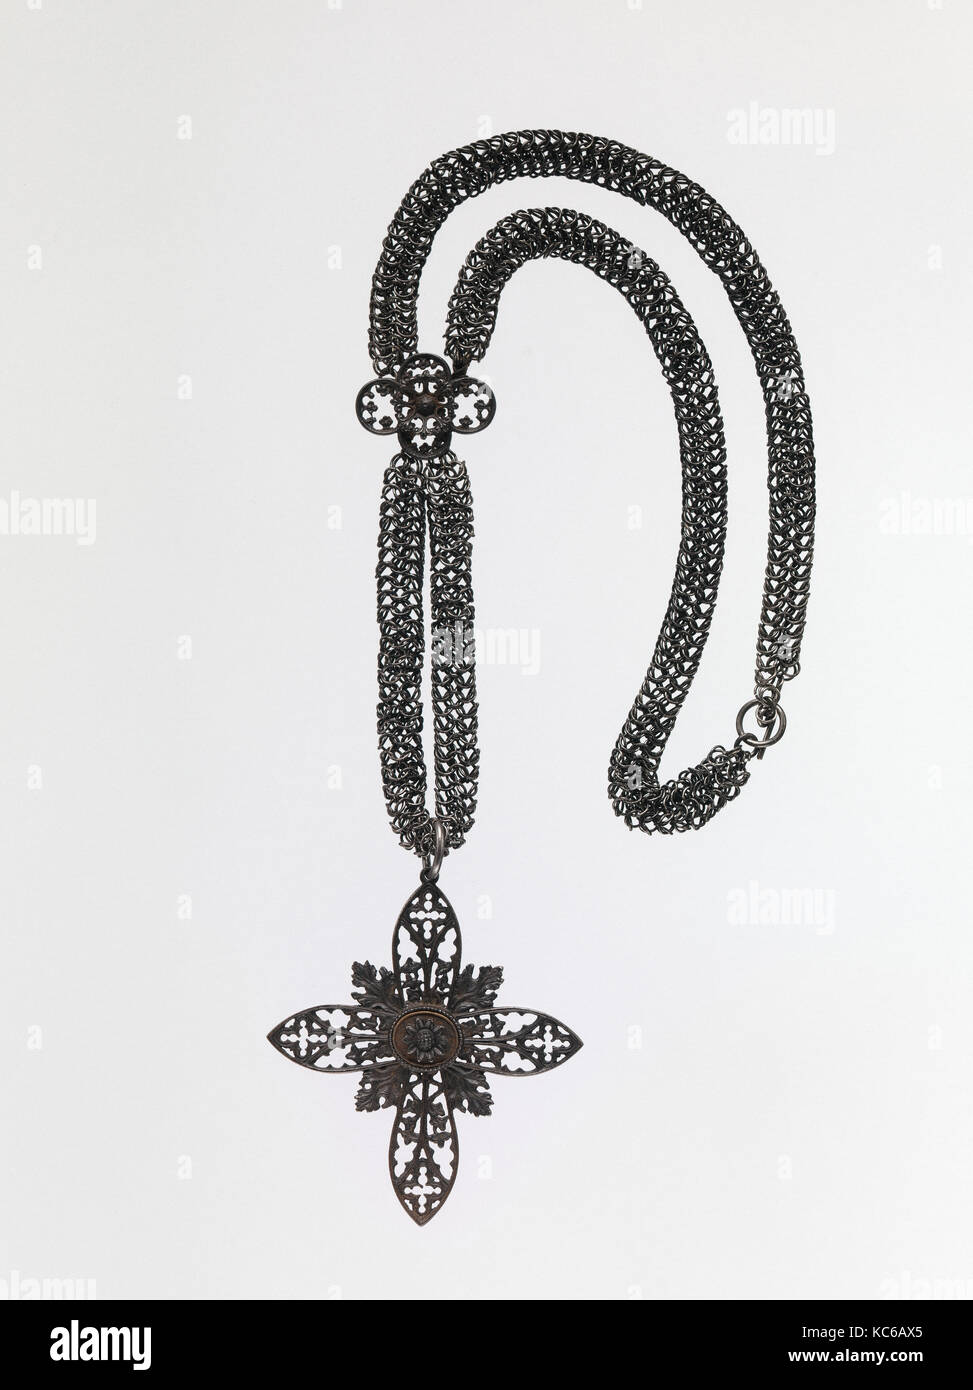 Berlin ironwork necklace with cross pendant, ca. 1830 Stock Photo